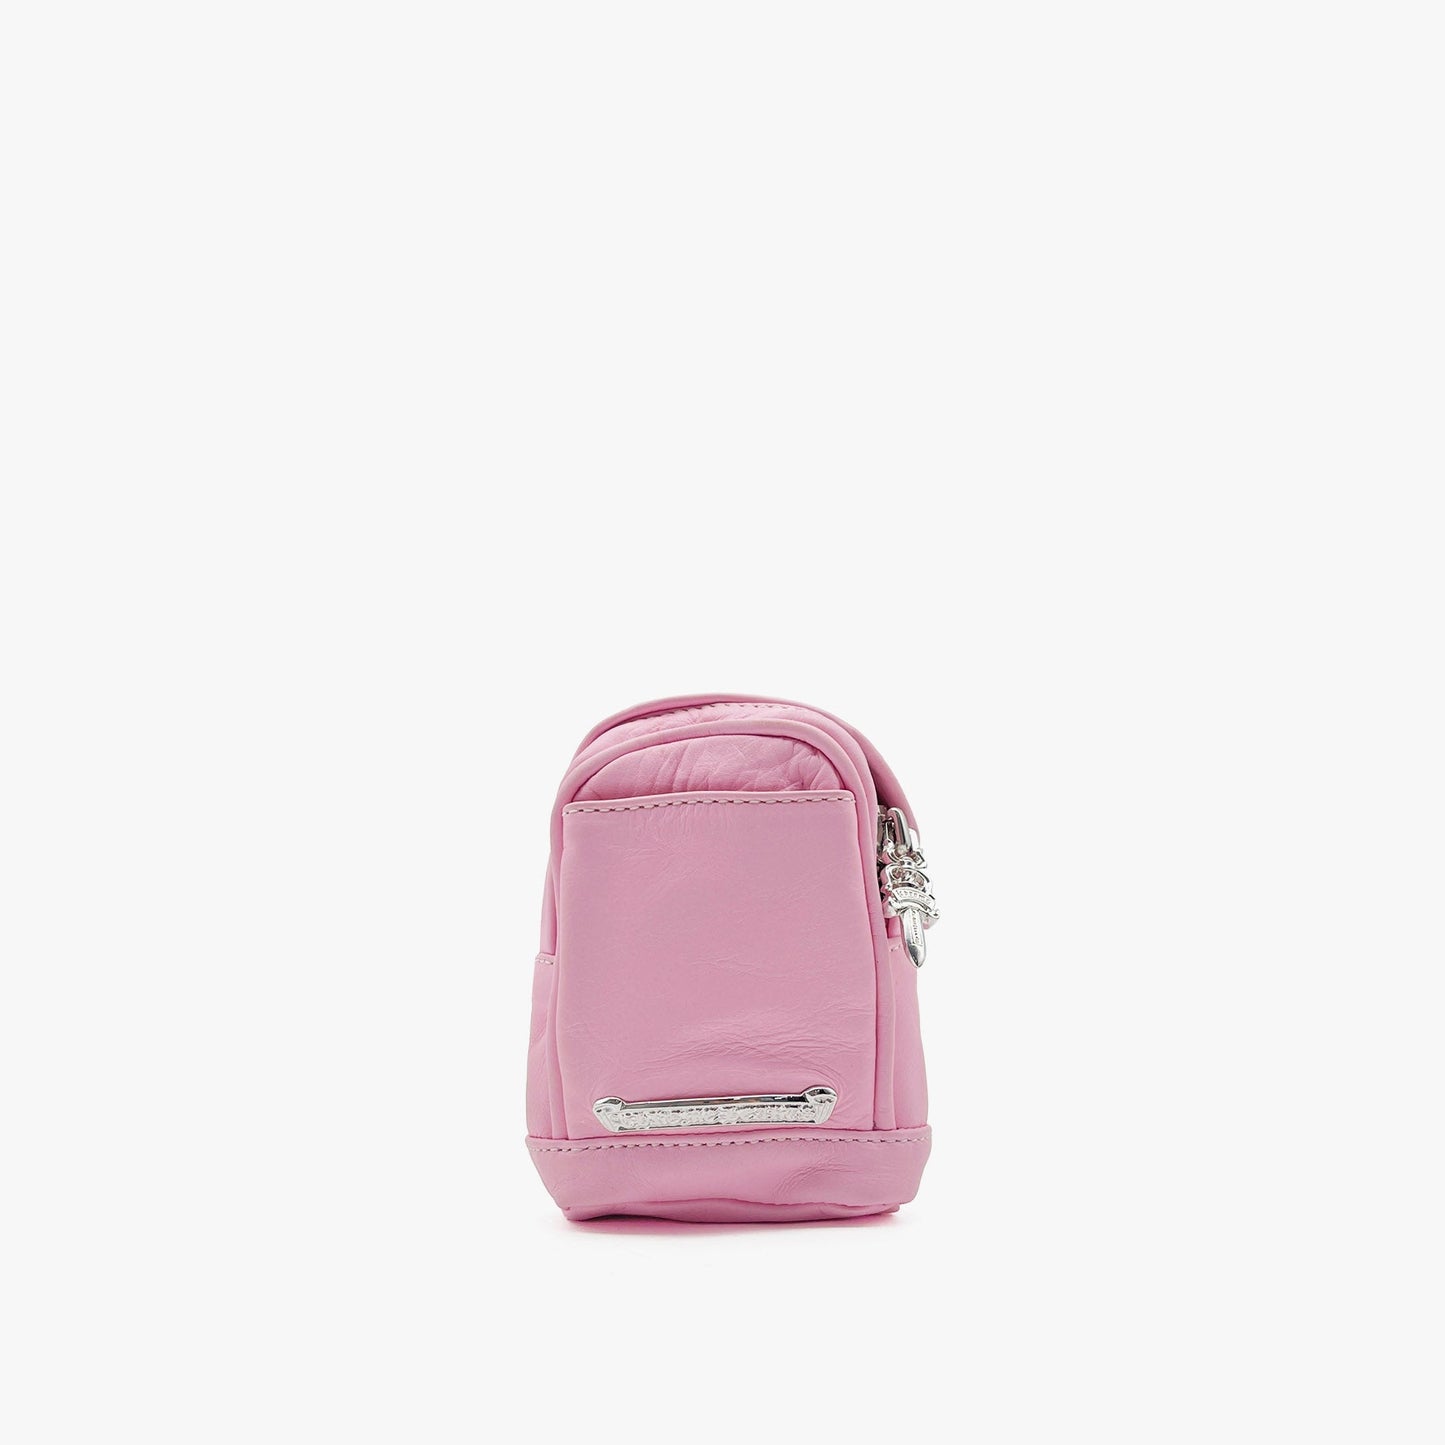 Chrome Hearts Paris Exclusive Baby Pink Wrist Bag - SHENGLI ROAD MARKET